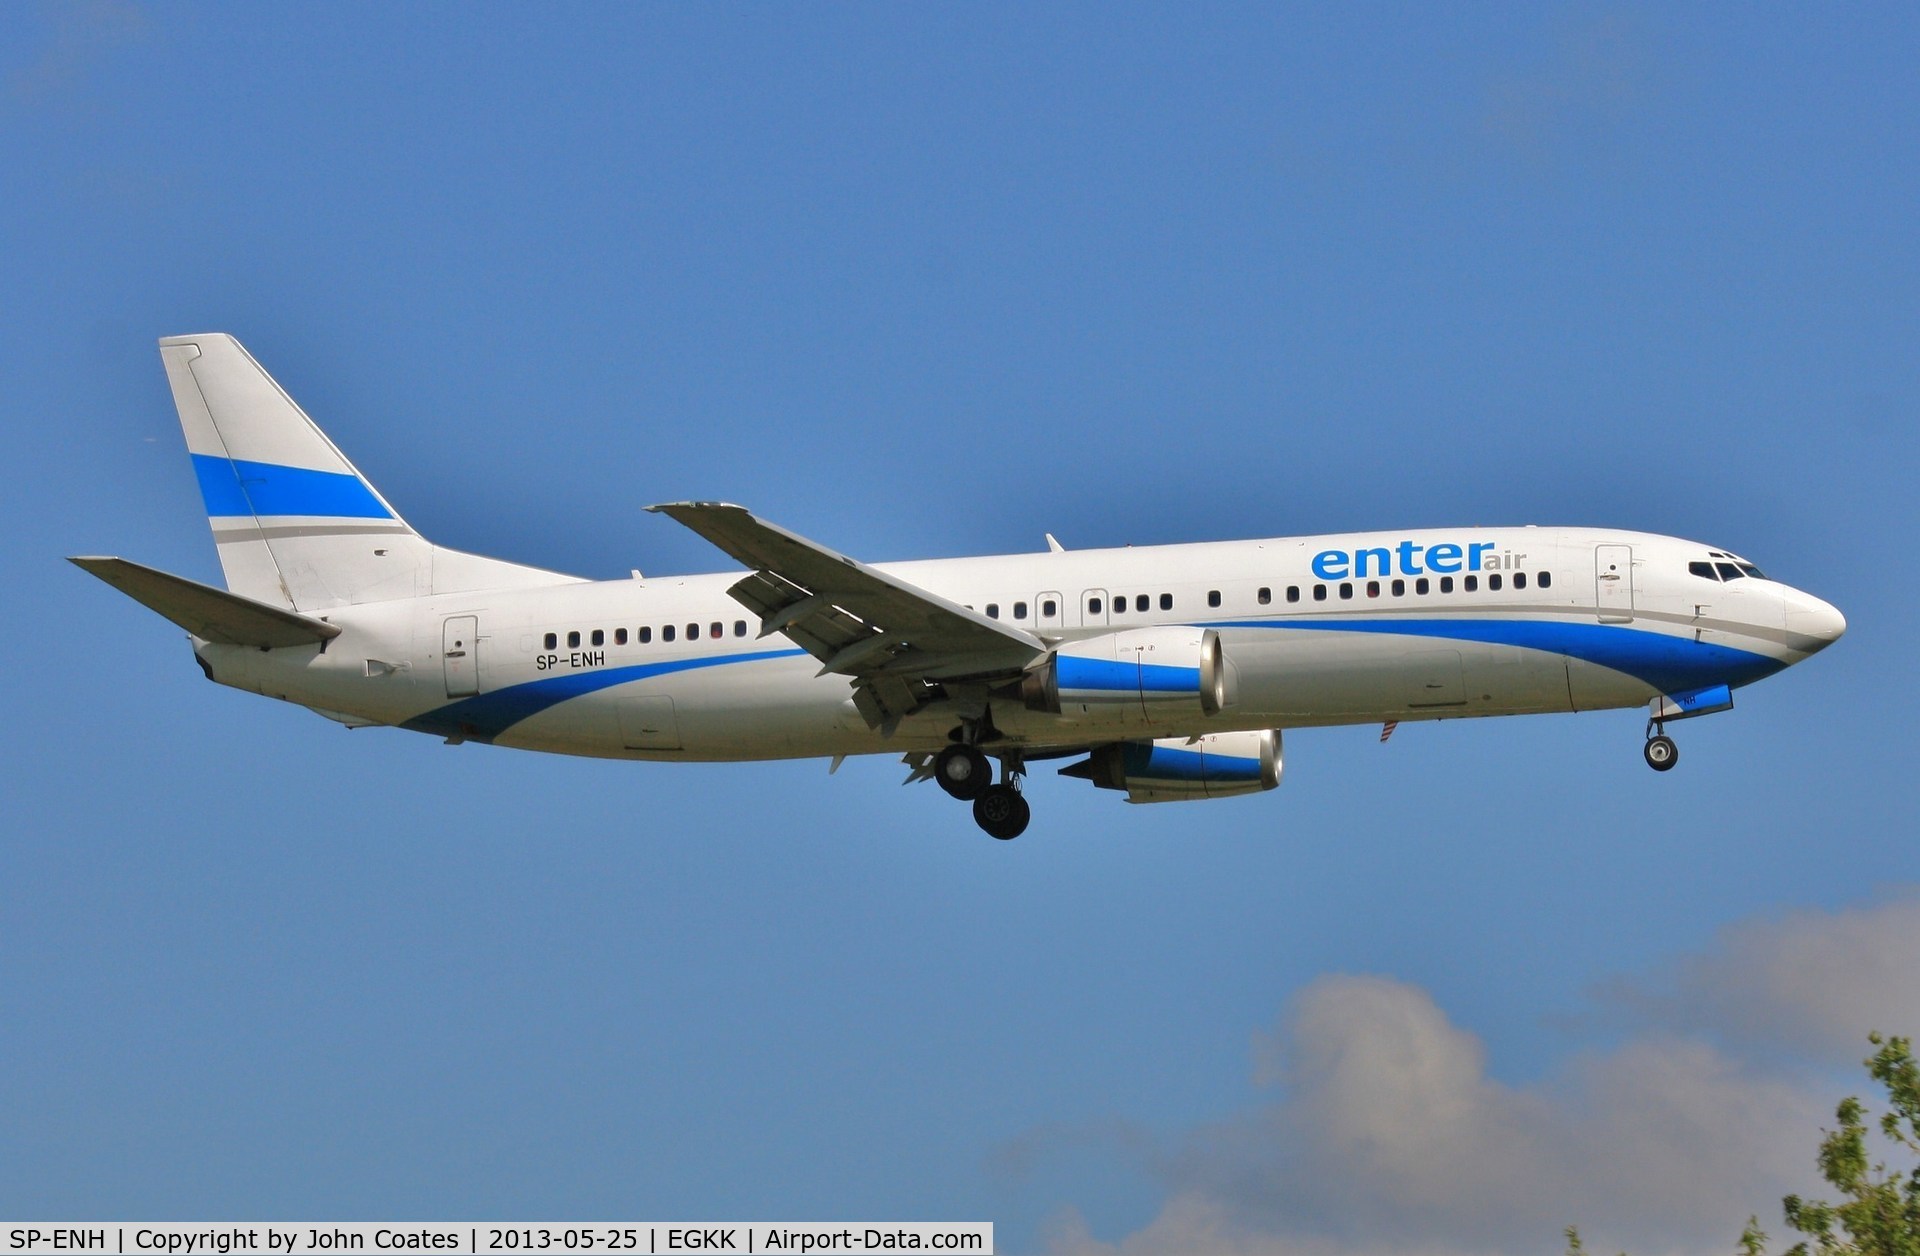 SP-ENH, 1997 Boeing 737-405 C/N 25795, Finals to 08R